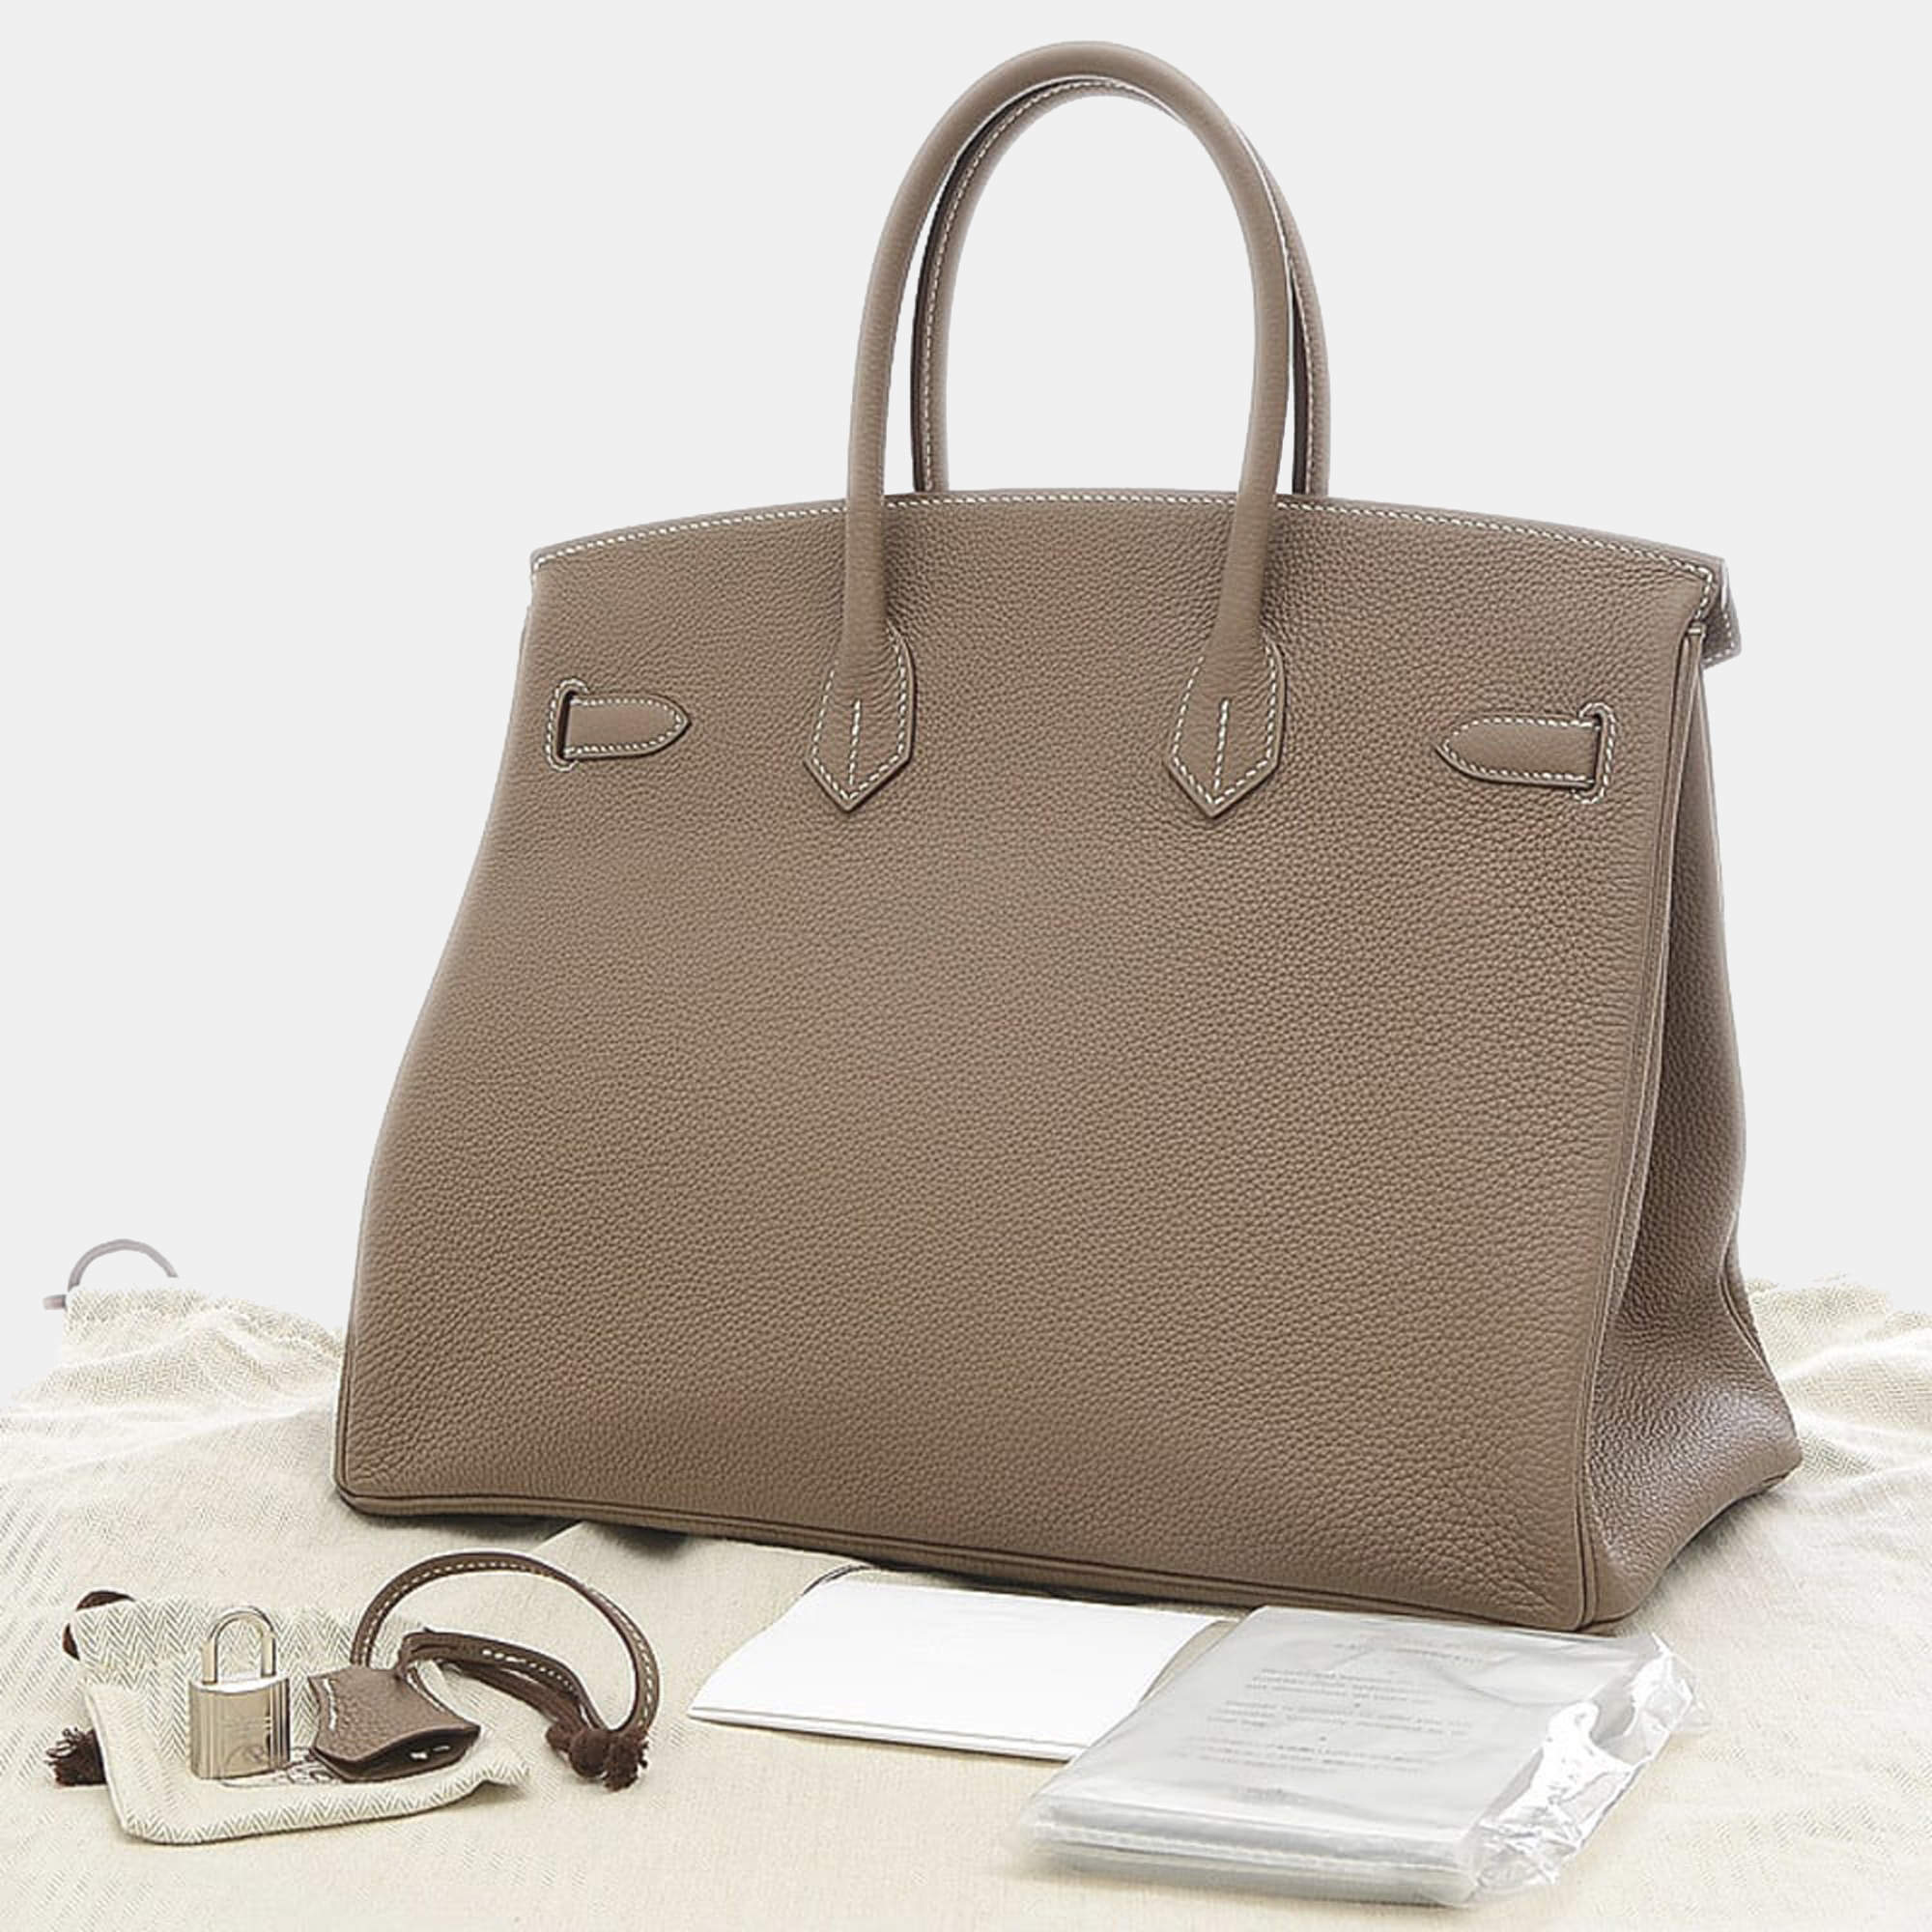 Handbags Hermès Birkin 35 Togo